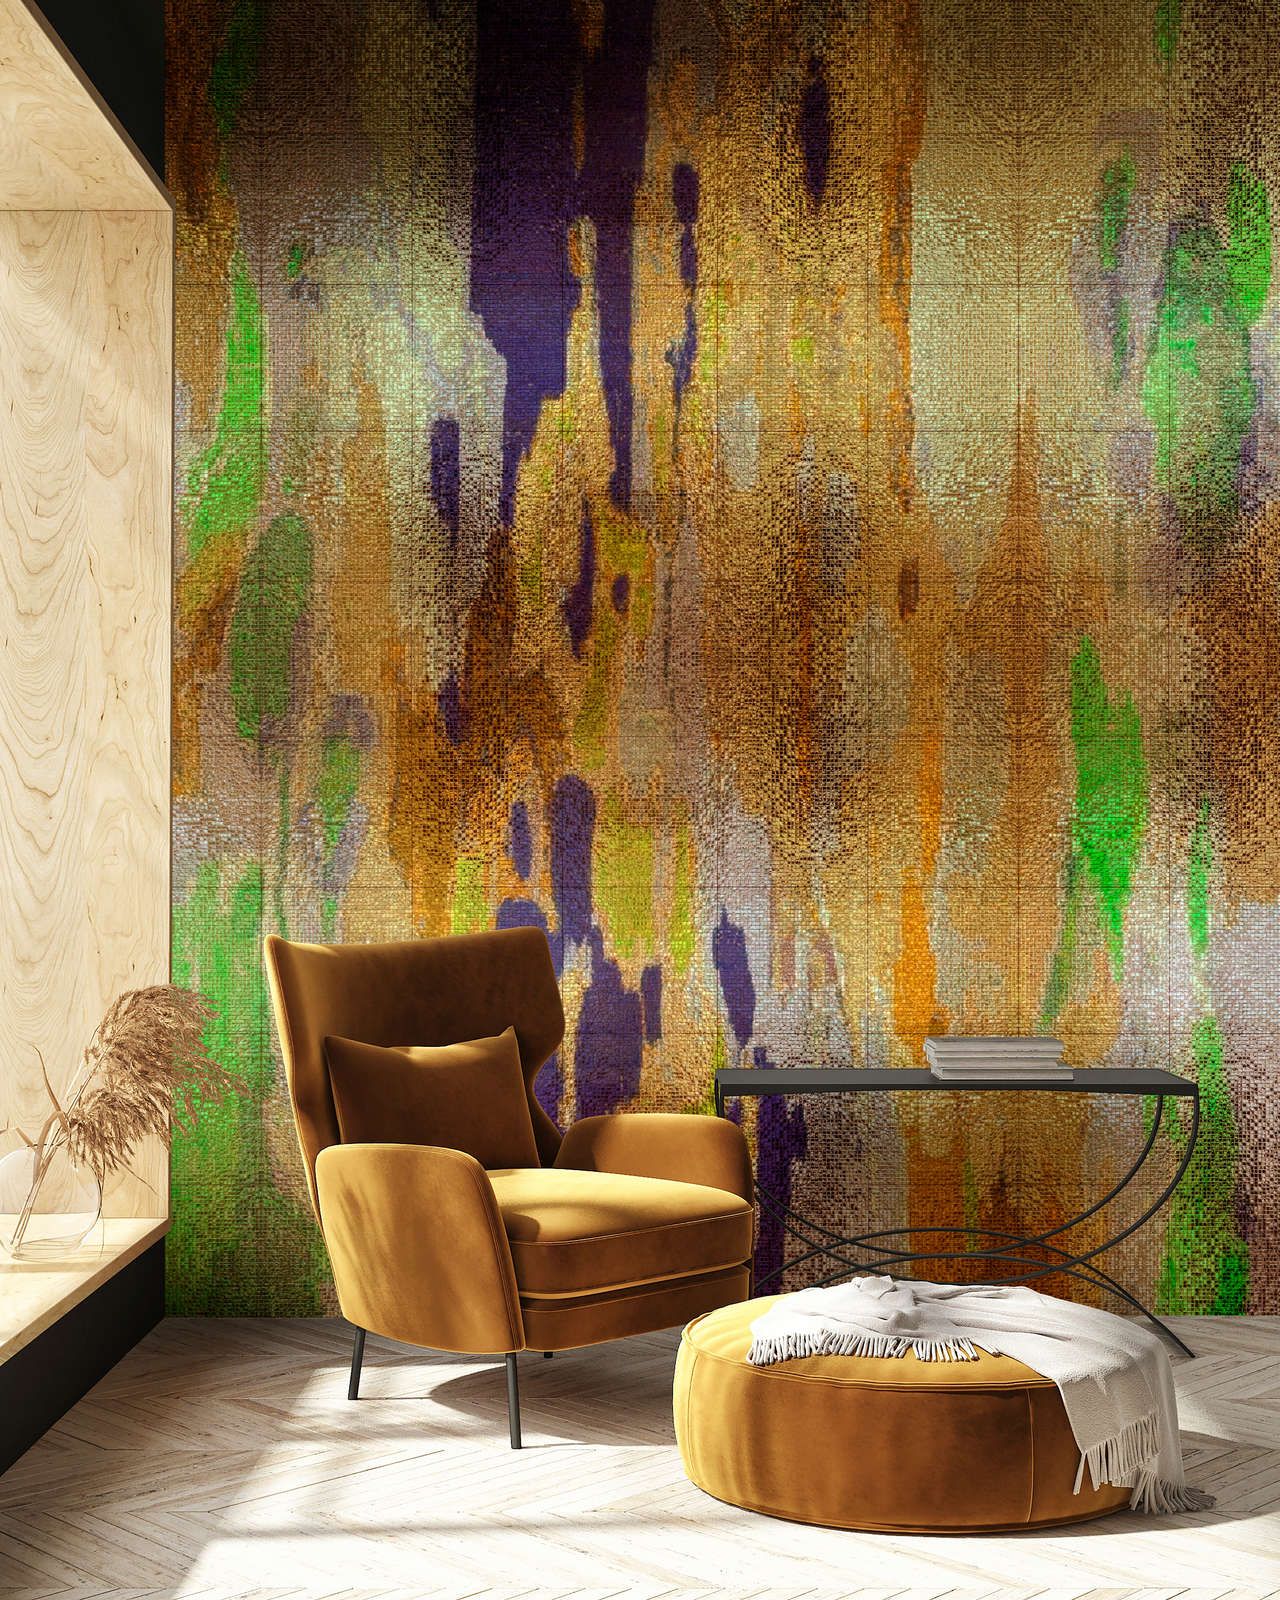             Digital behang »marielle 1« - Kleurverloop paars, goud, groen met mozaïekstructuur - Licht gestructureerde vliesstof
        